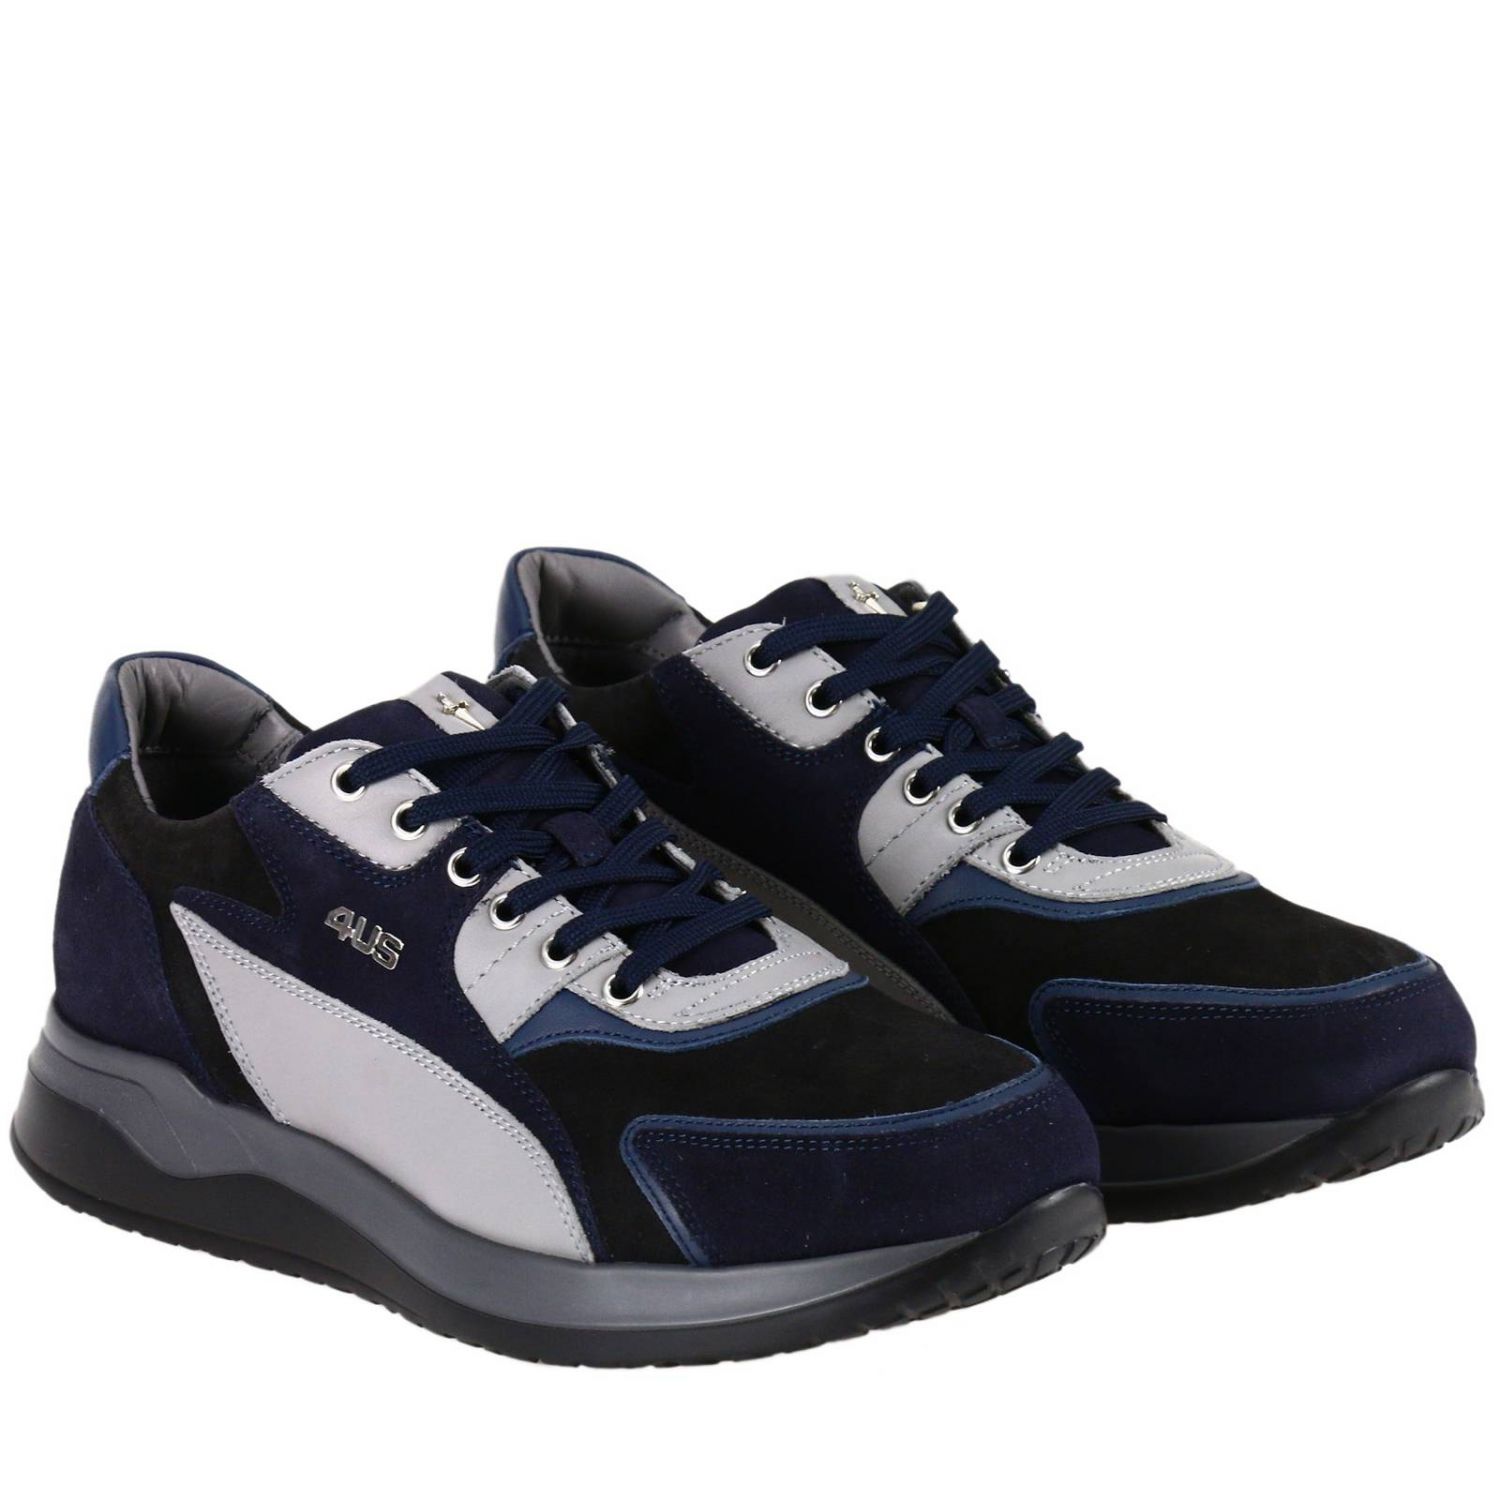 Shoes men Paciotti 4us | Sneakers Paciotti 4Us Men Navy | Sneakers ...